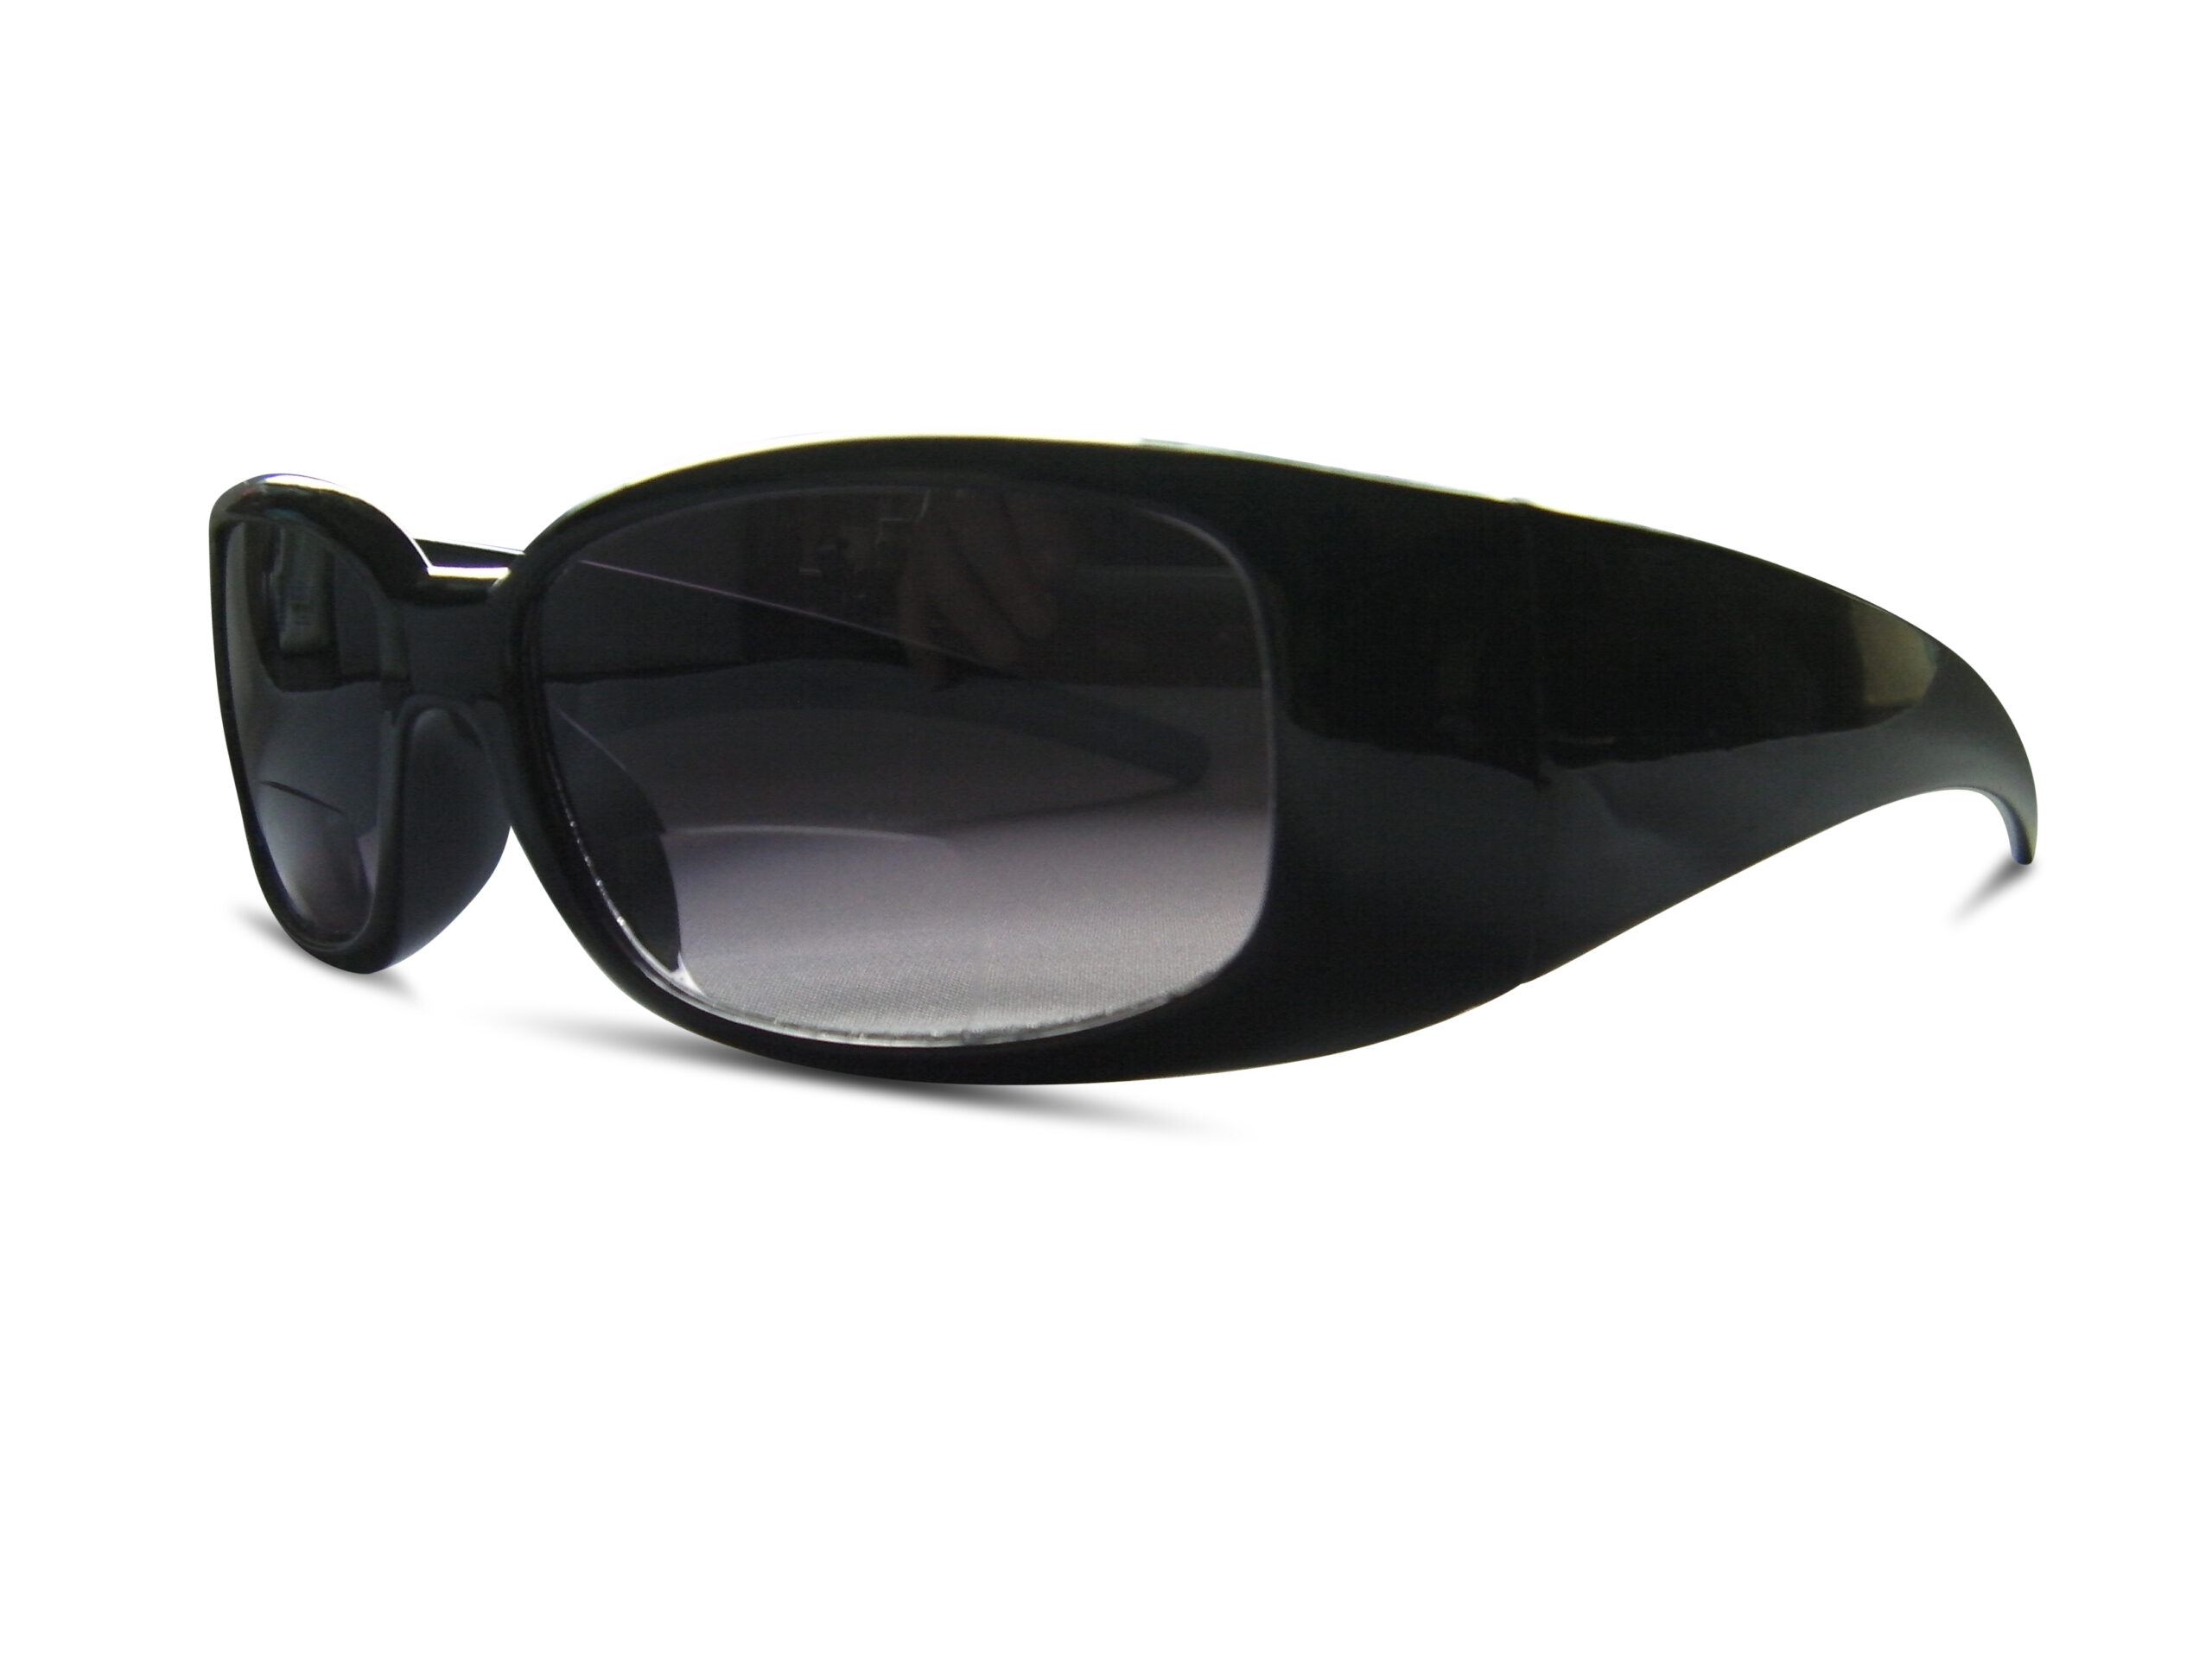 Aviator sunglasses Black and White Stock Photos & Images - Alamy